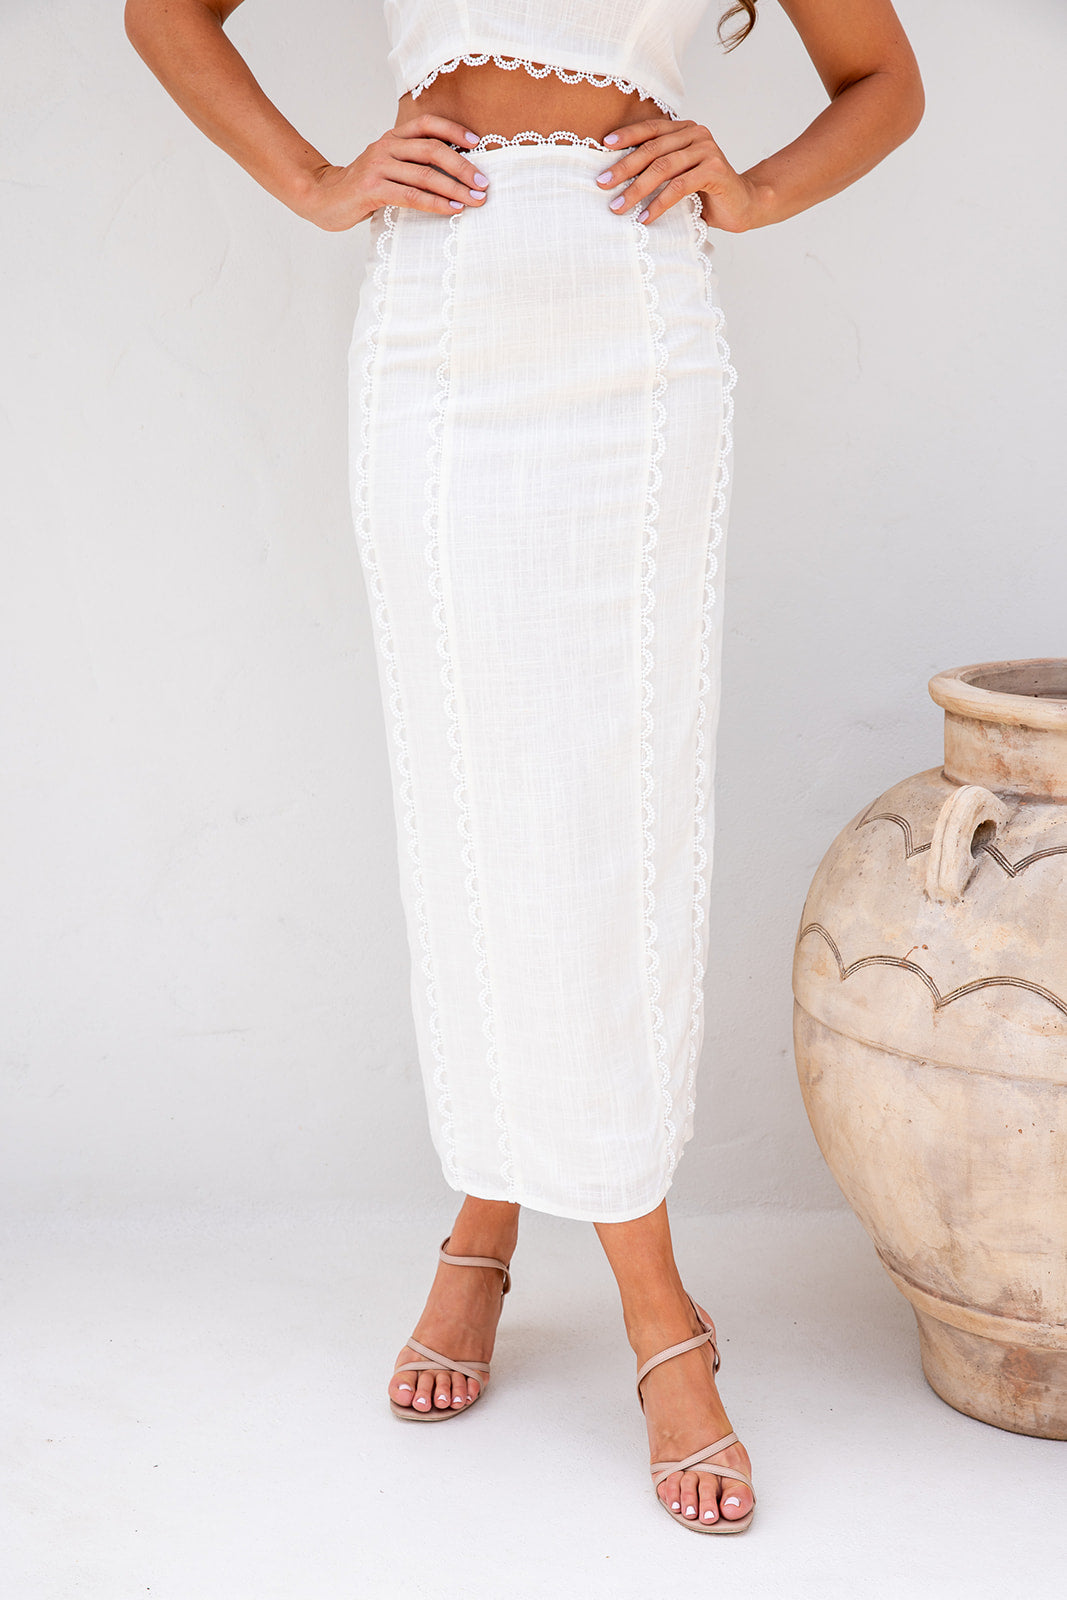 Cyprus Top and Skirt Set - White